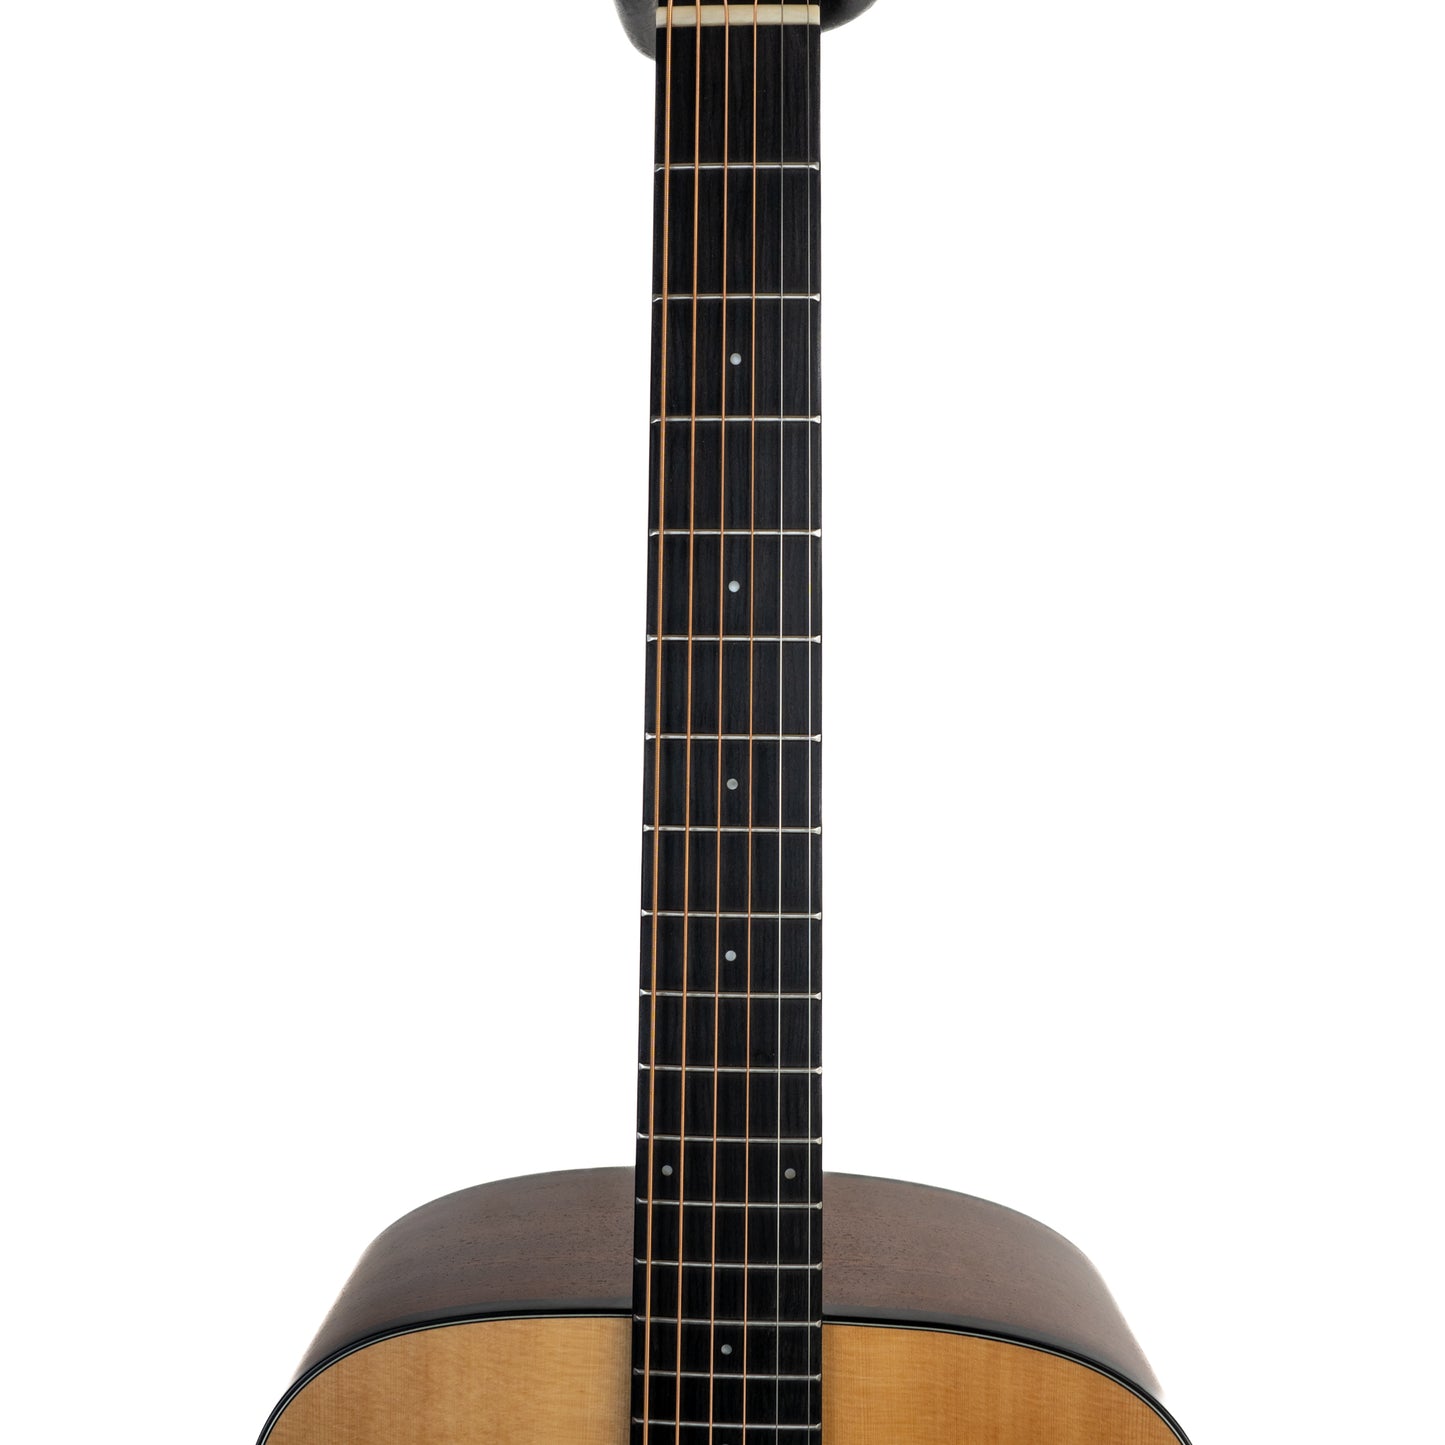 Alvarez AD30 artist dreadnought acoustic guitar, satin finish, huge, open tone!